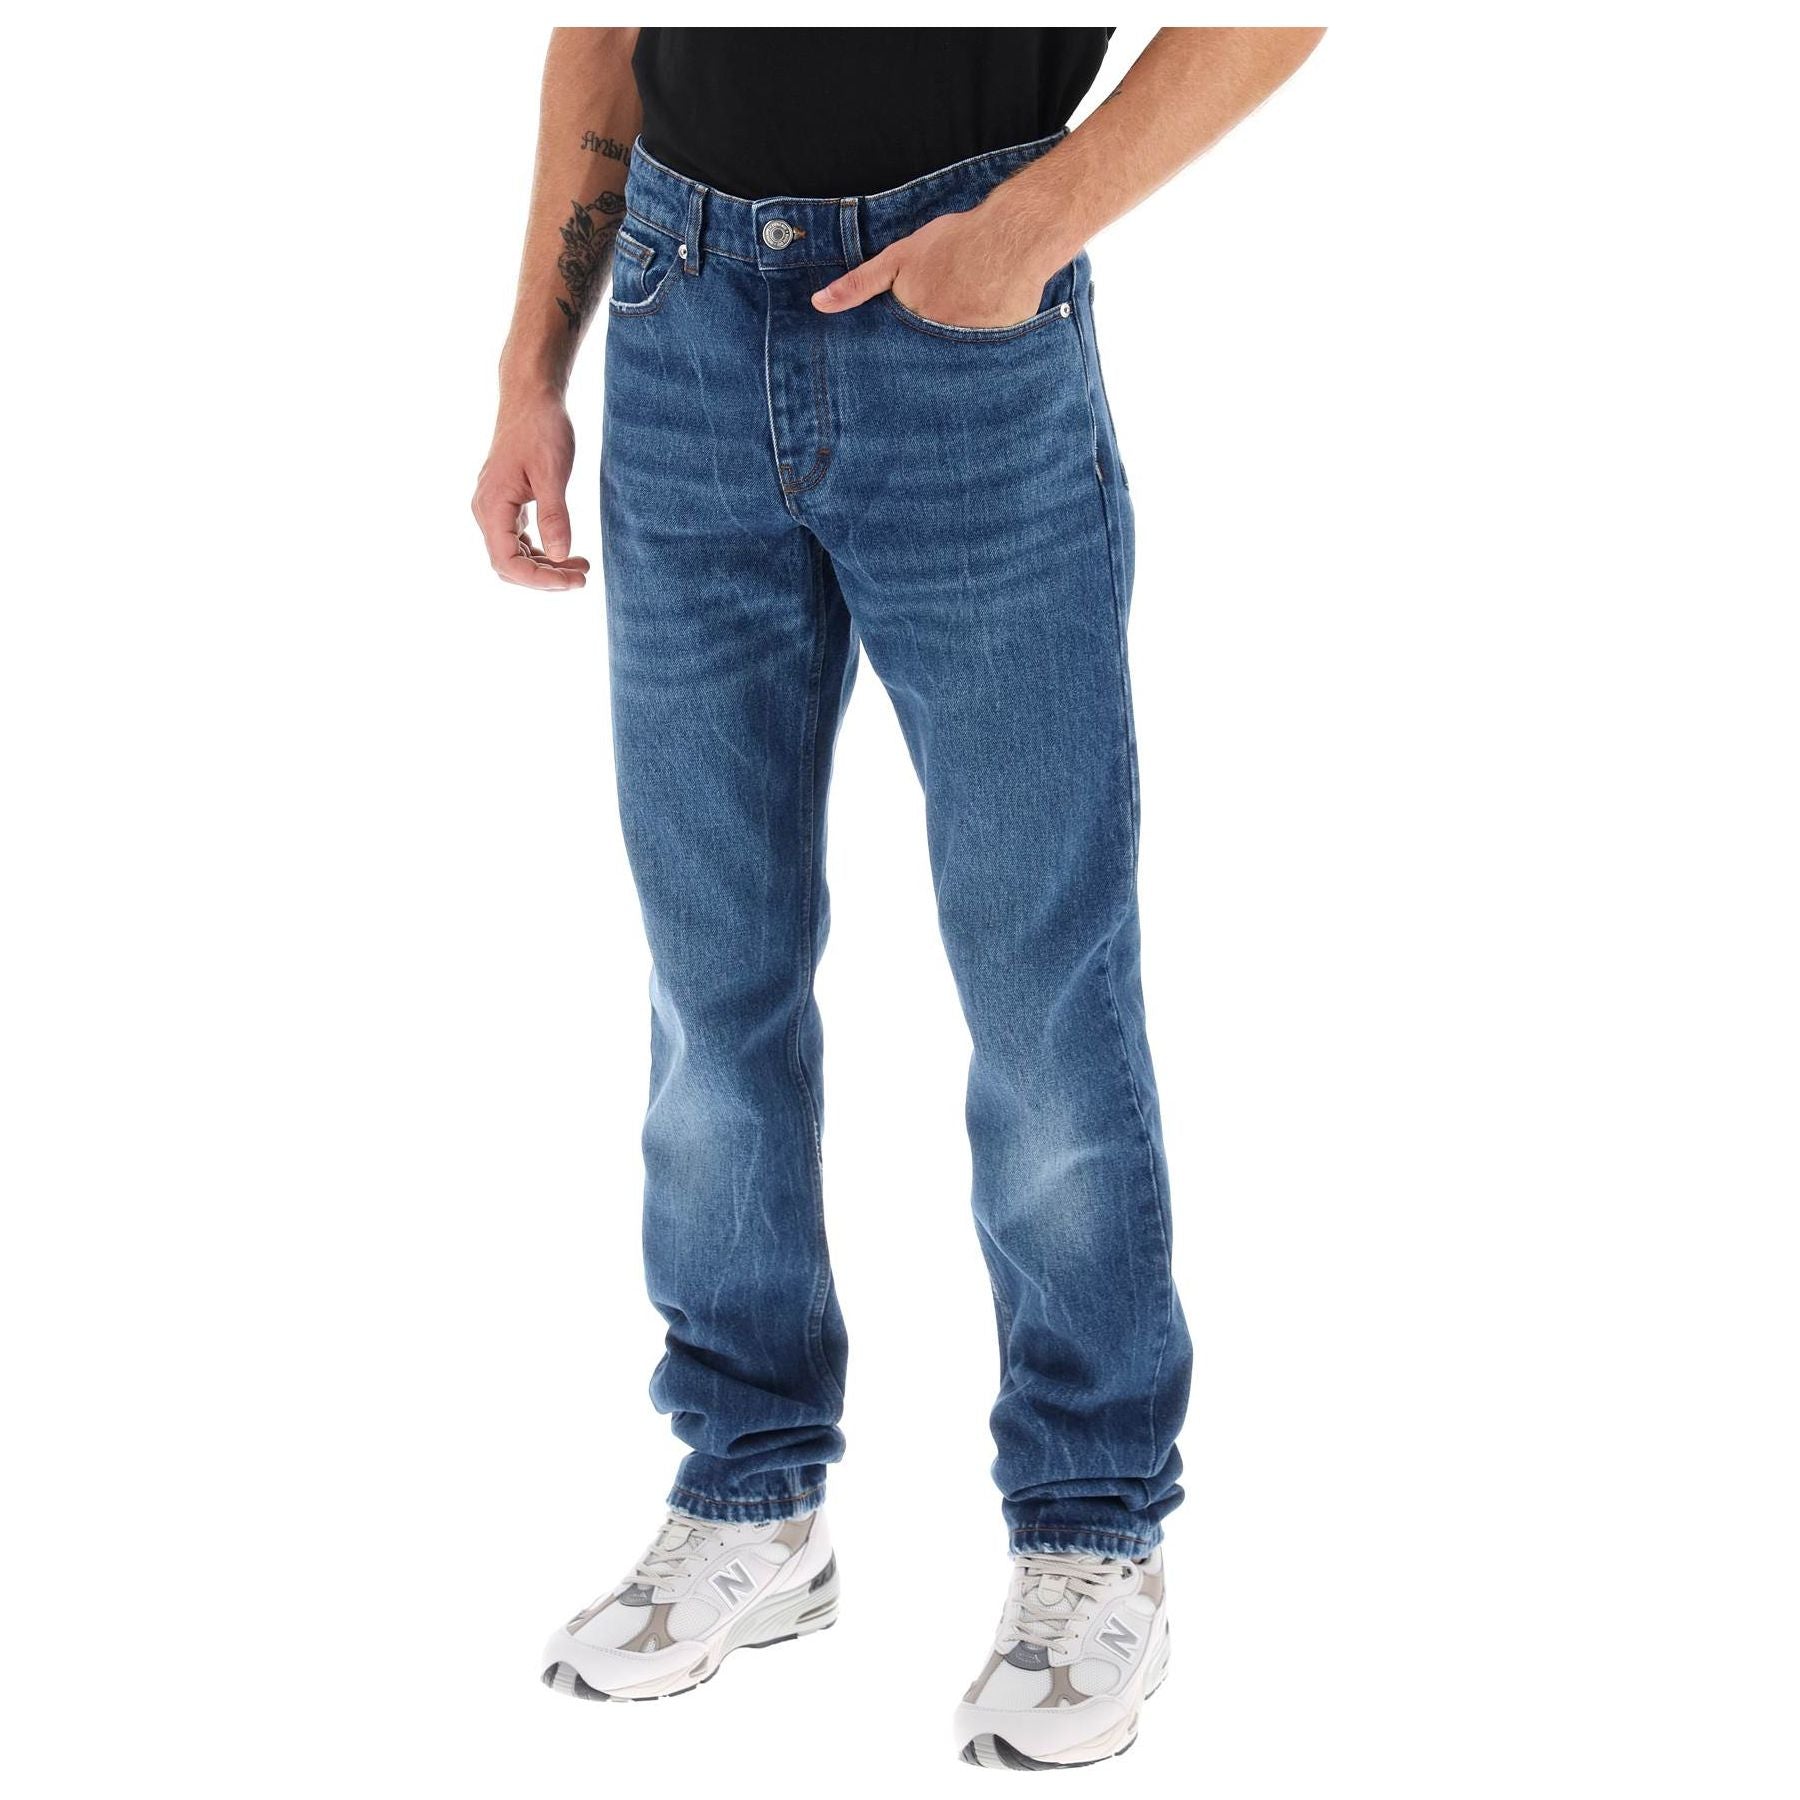 Pure Cotton Regular Fit Jeans